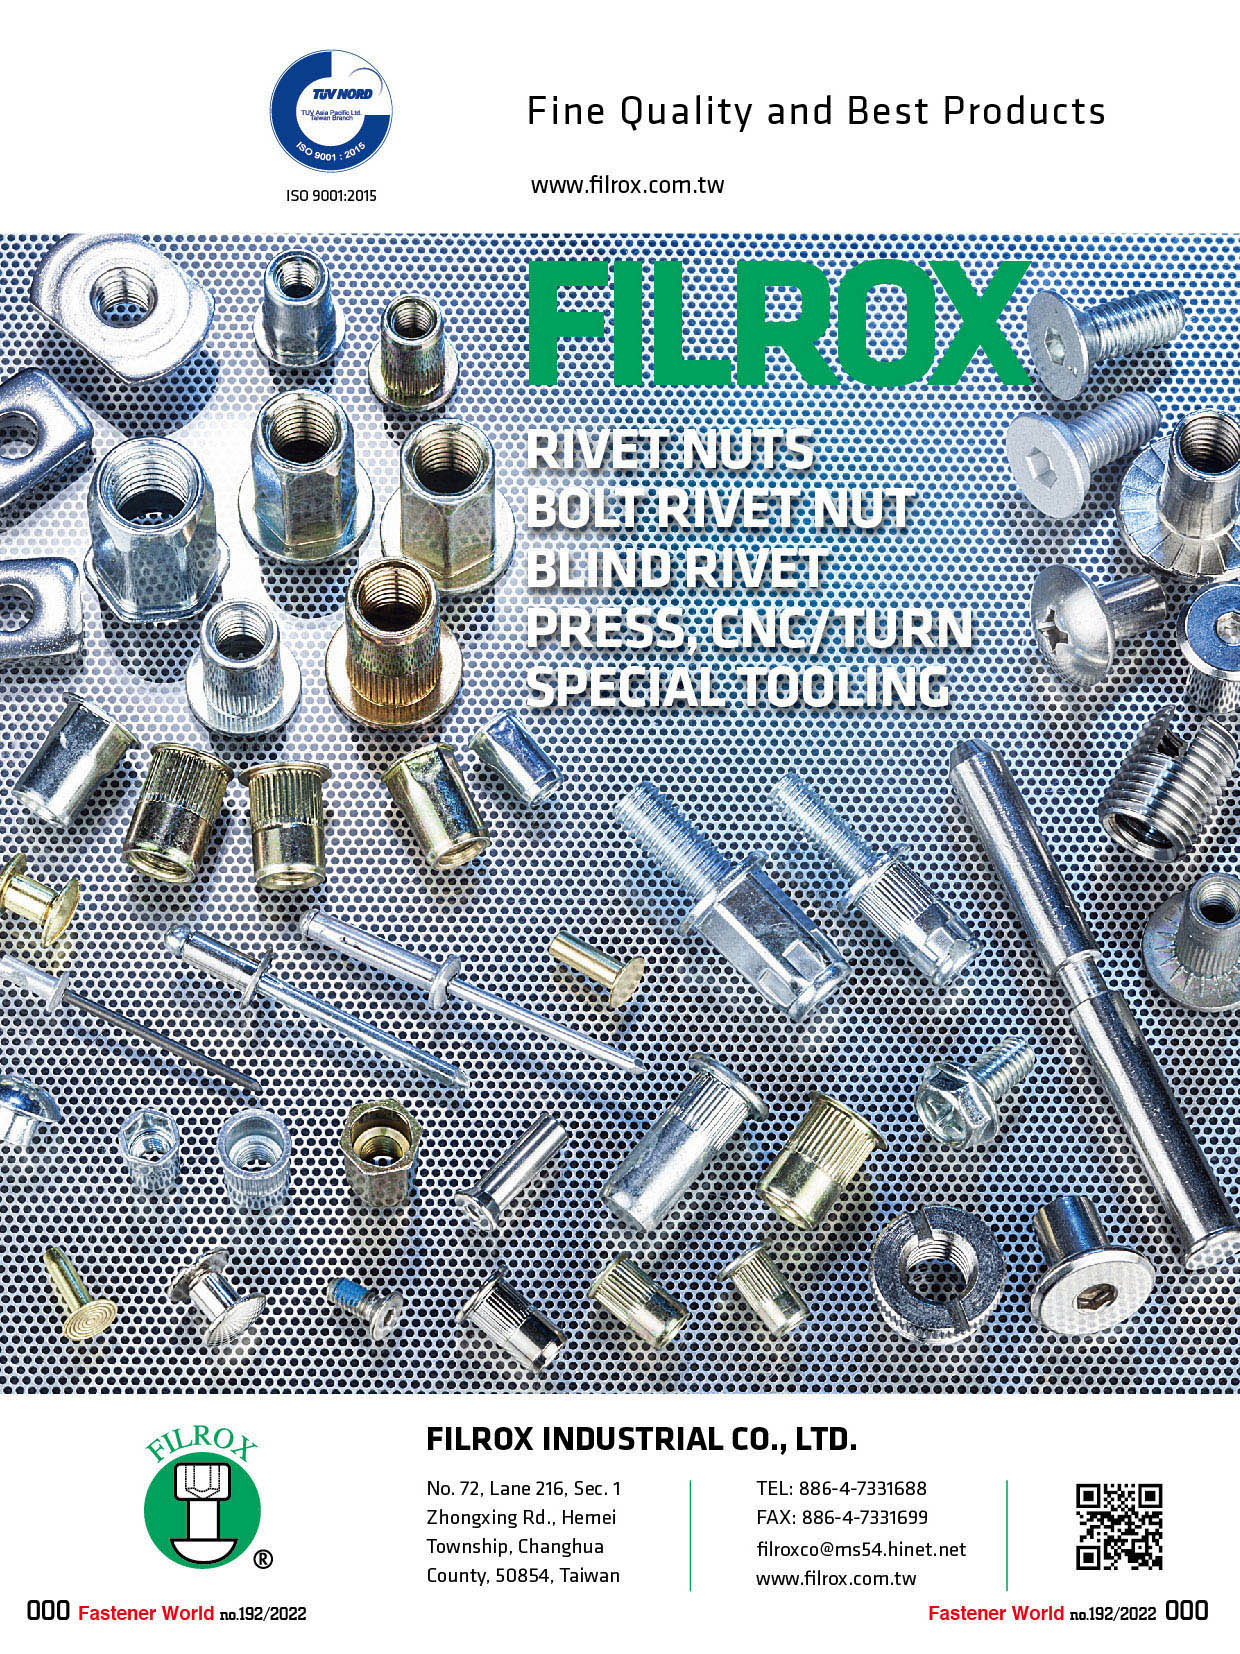 FILROX INDUSTRIAL CO., LTD.  , Rivet Nuts, Bolt Rivet Nut, Blind Rivet, Press, CNC/Turn, Special Tooling , Blind Rivets